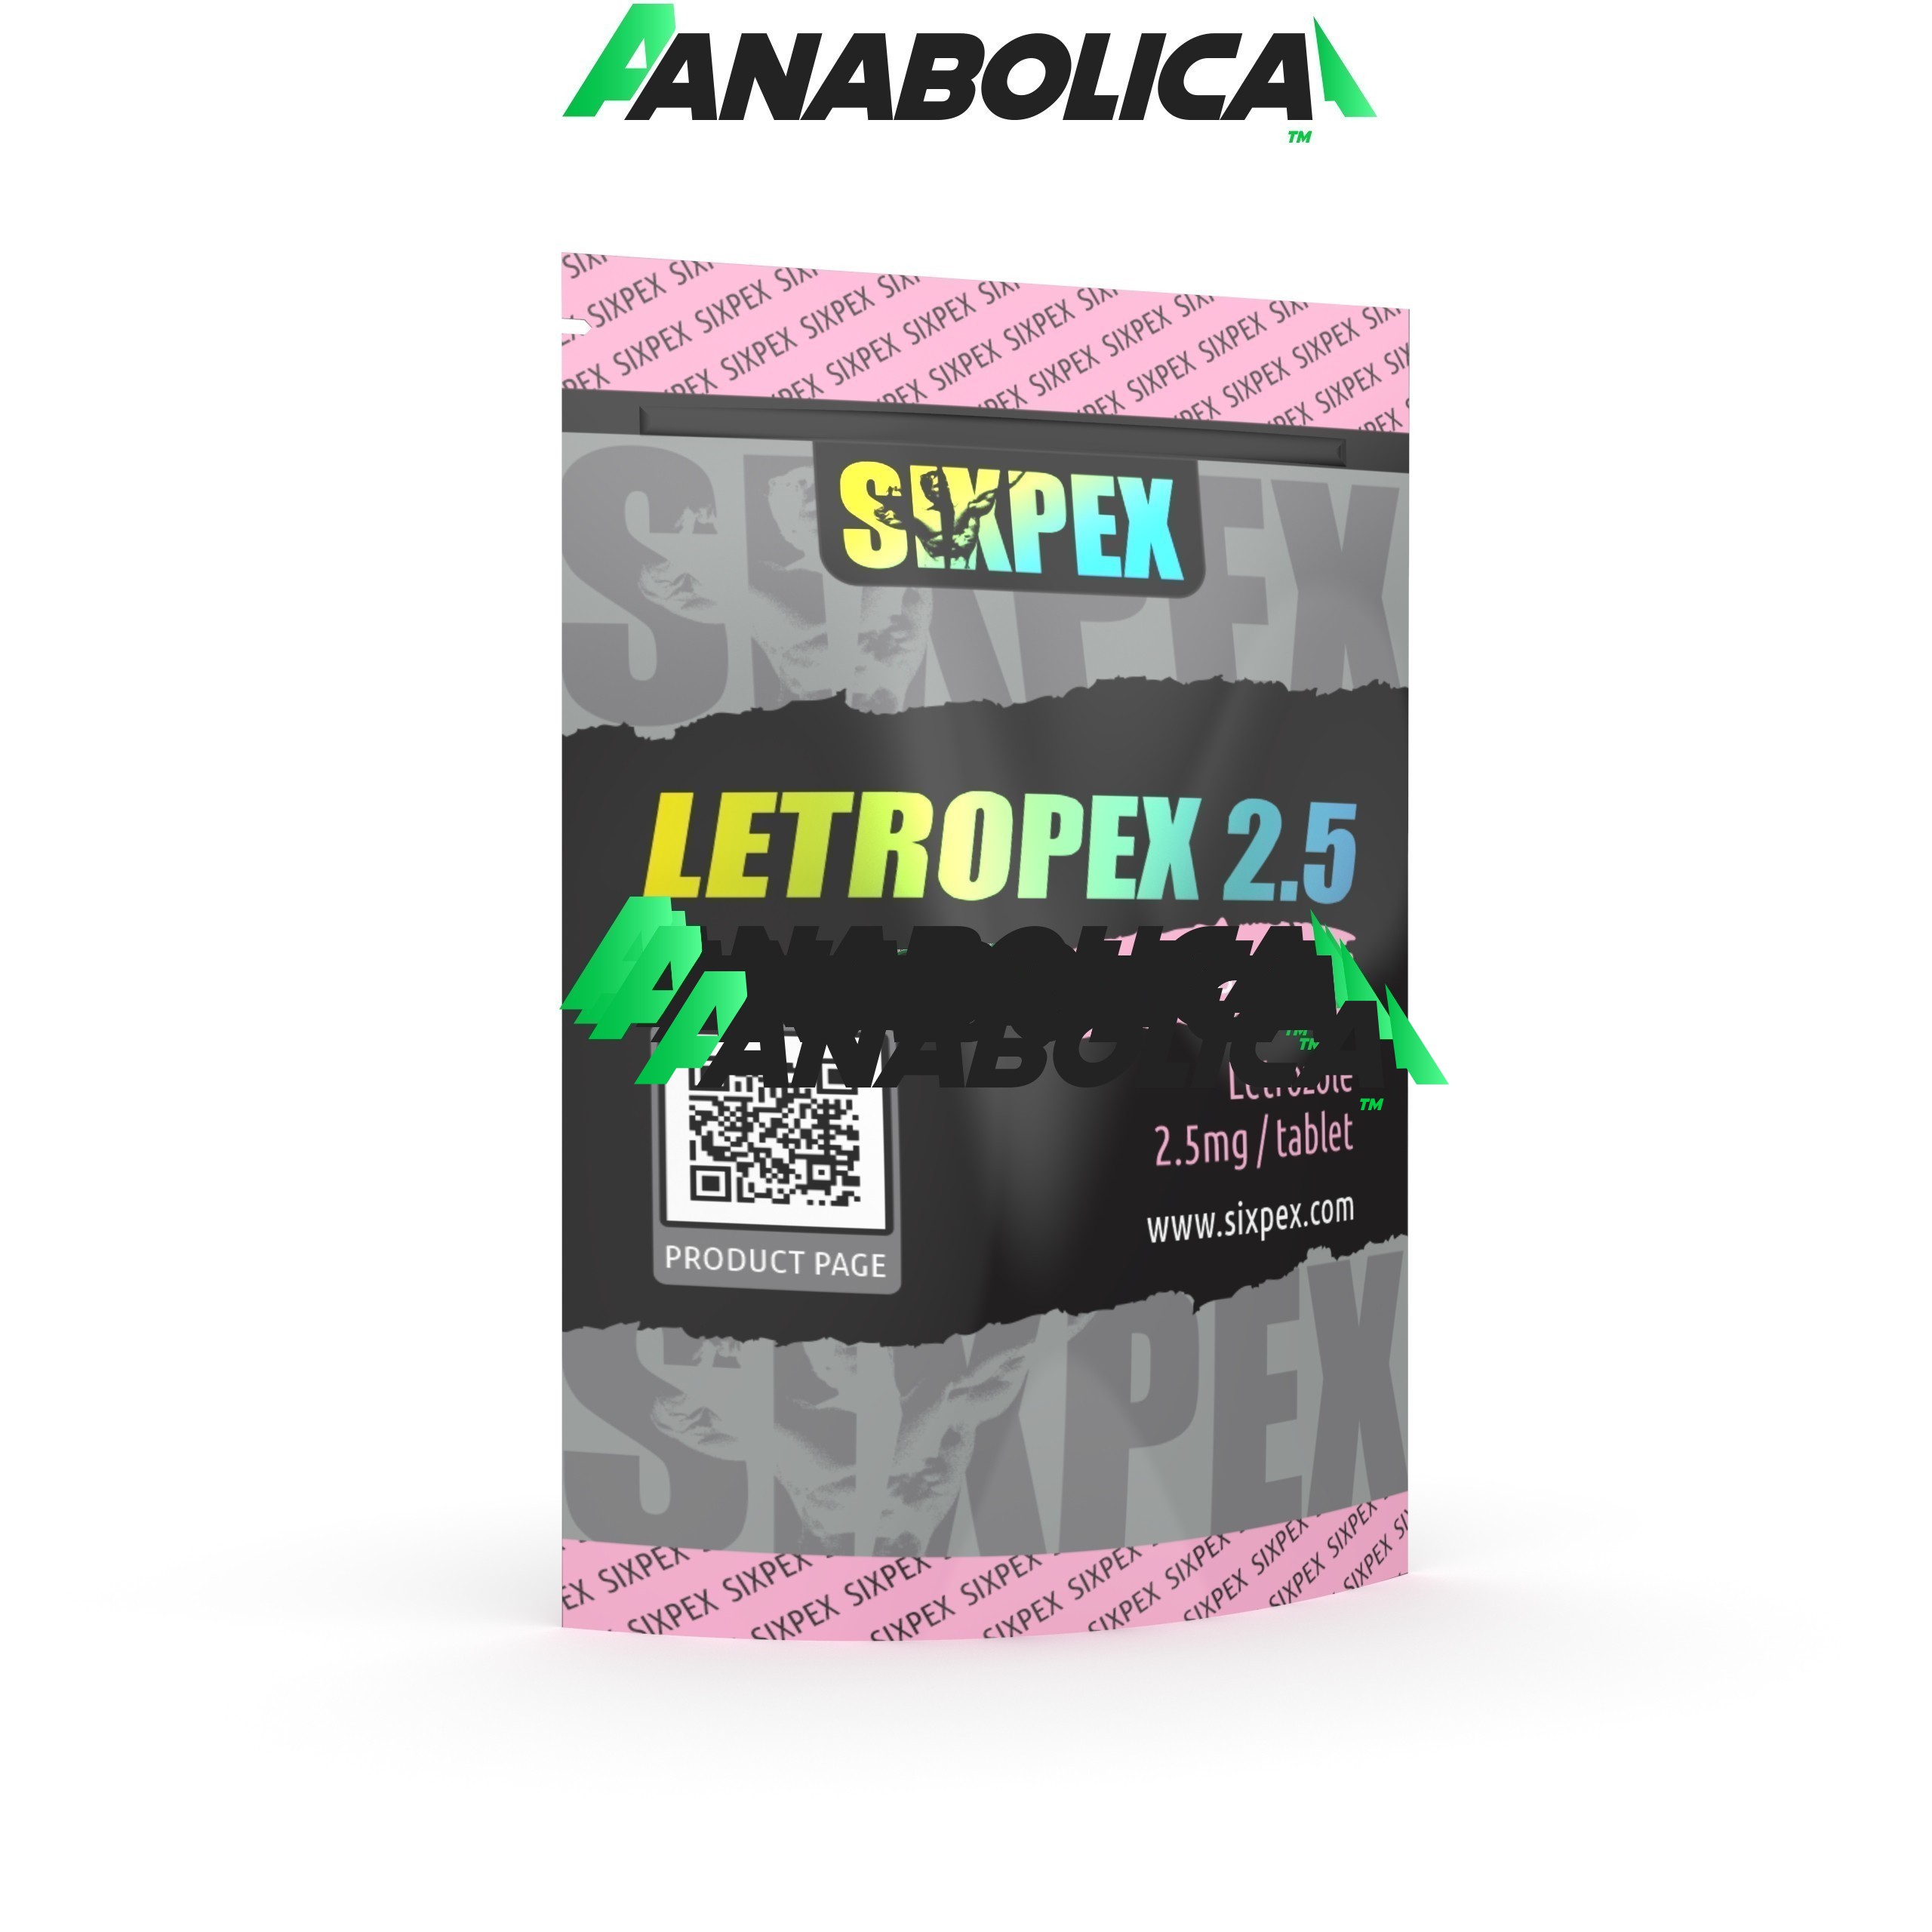  Letropex 2.5 - SixPex